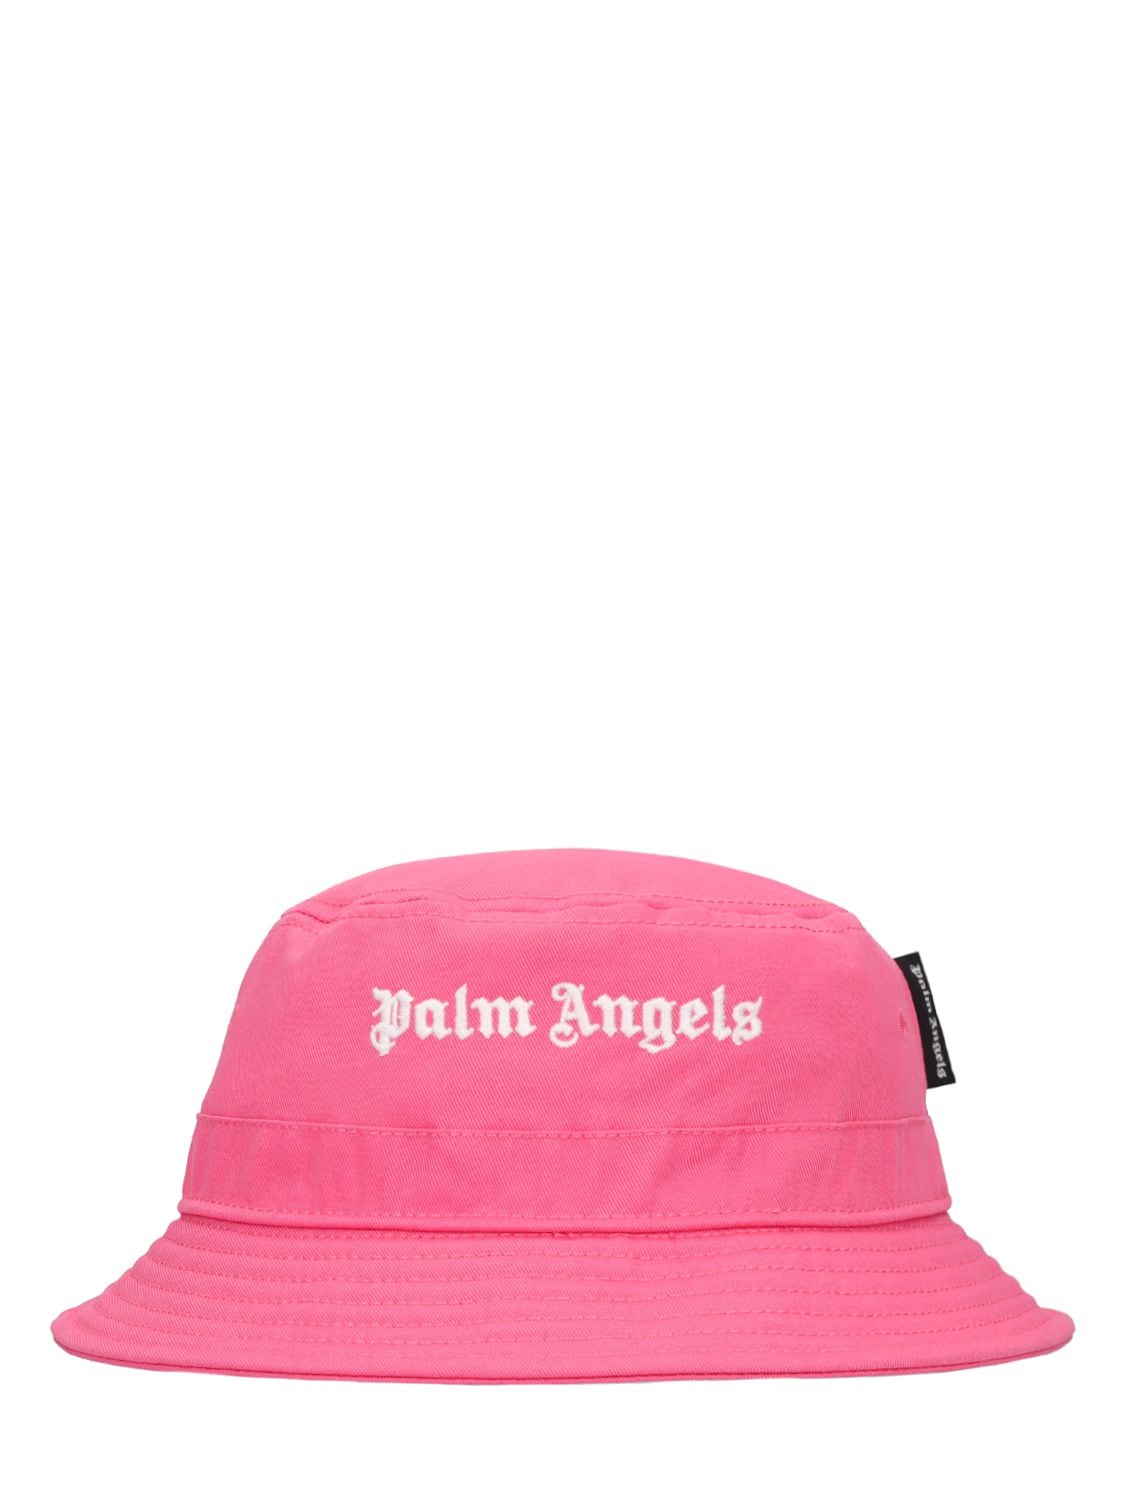 PALM ANGELS